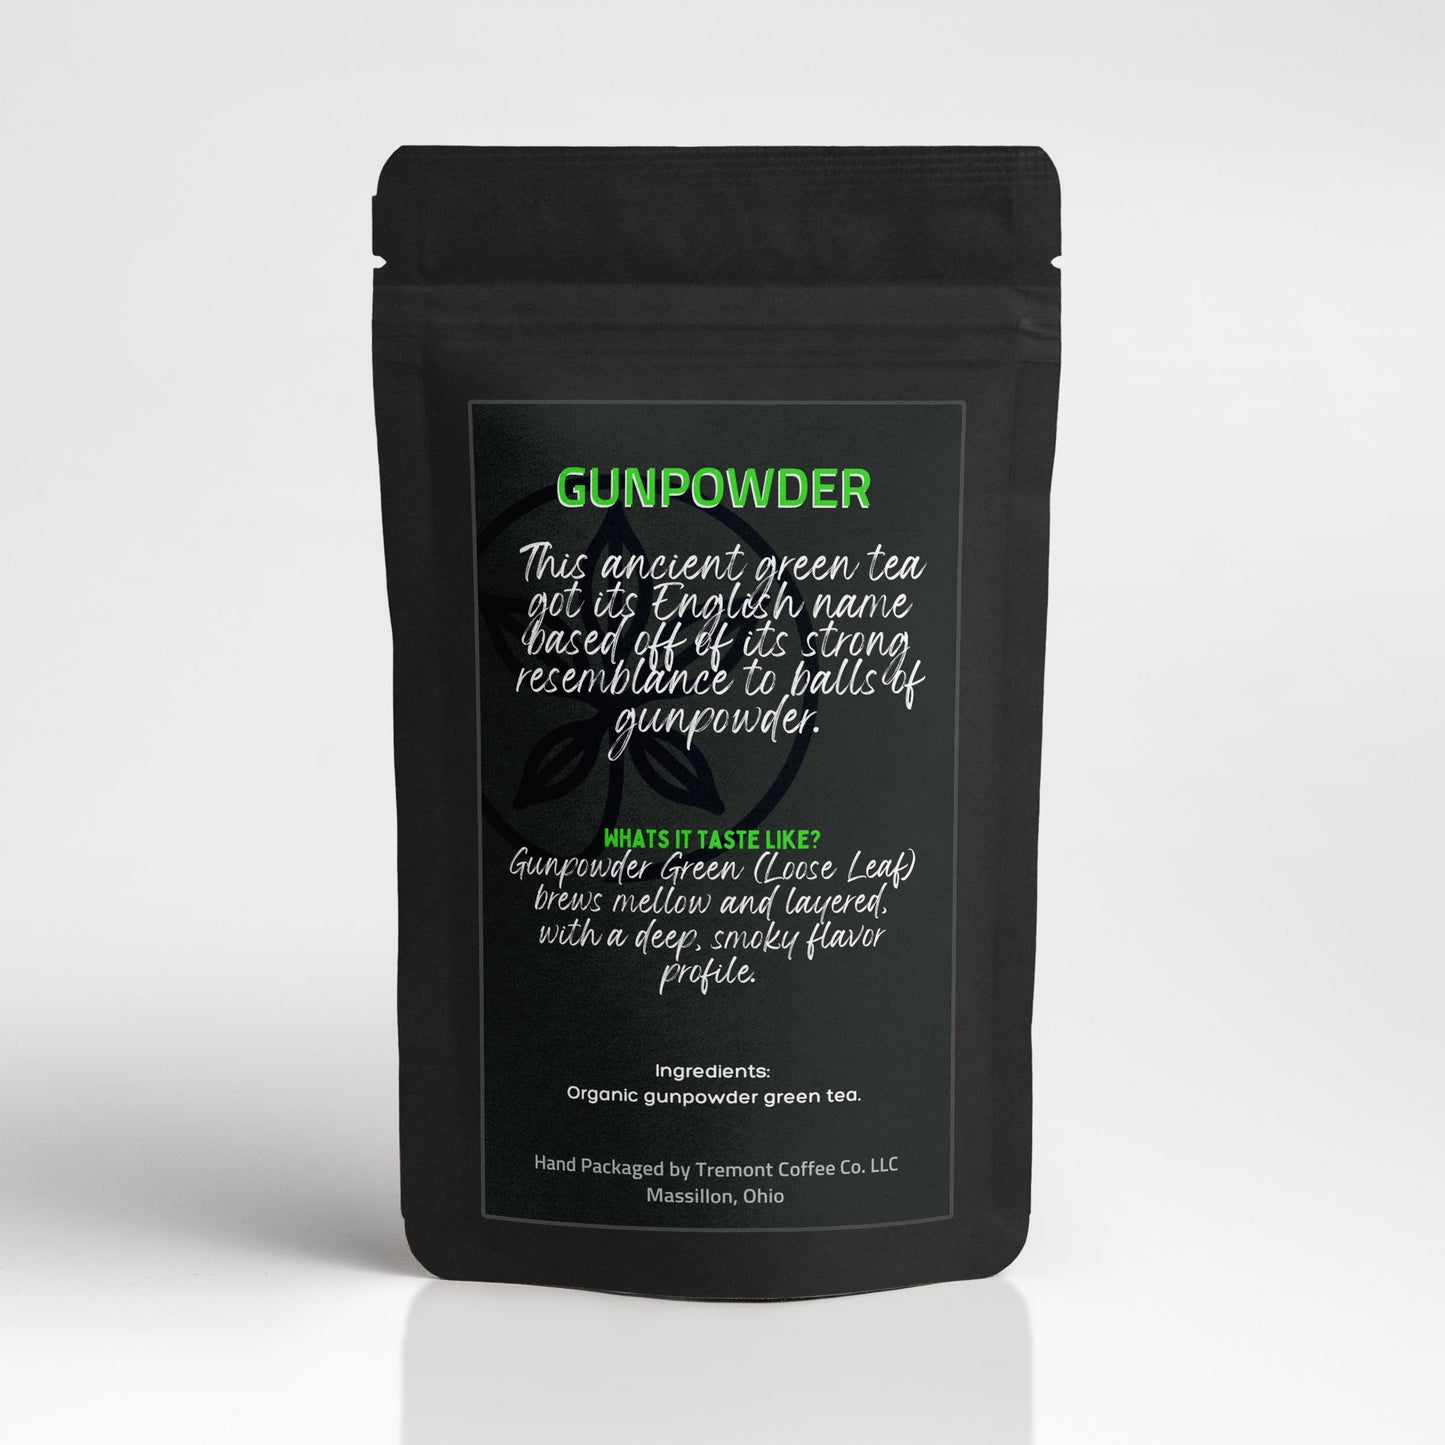 Gunpowder - Loose Leaf Tea